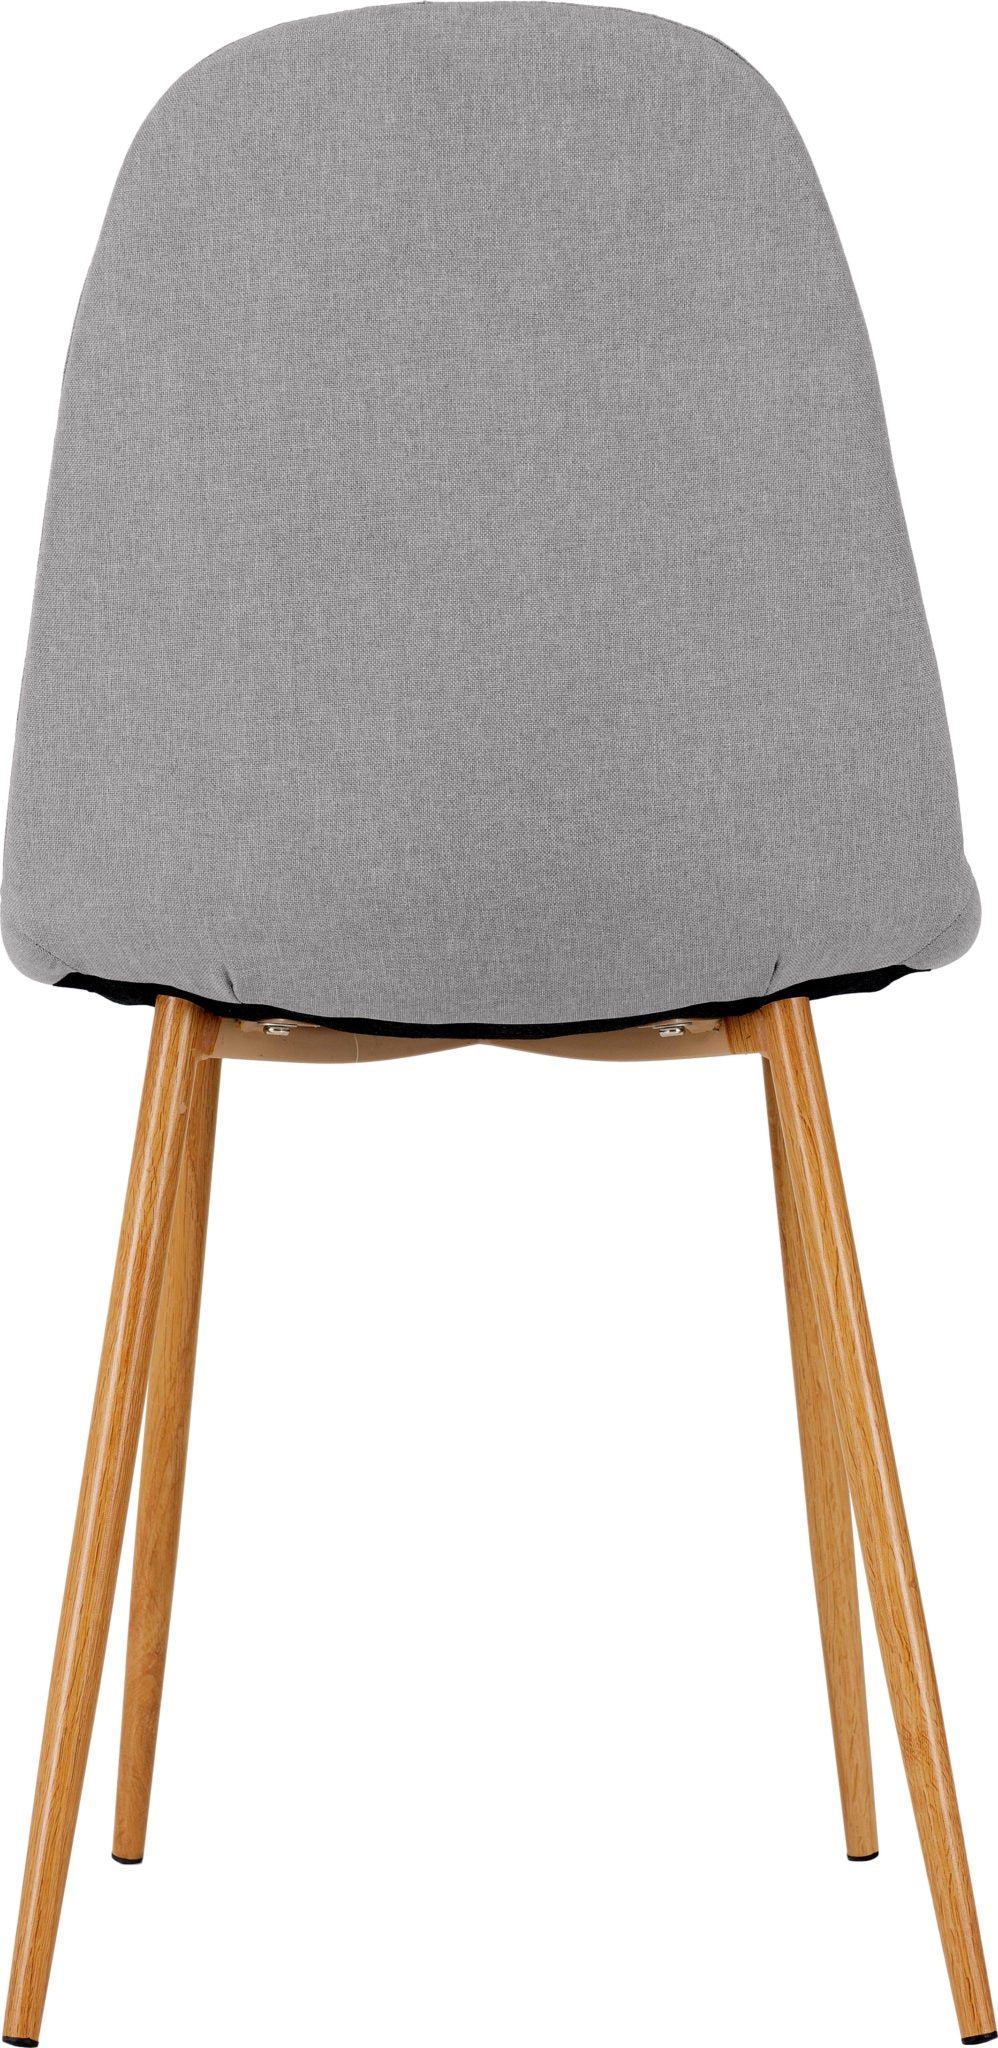 Barley Dining Set (X4 Chairs) - Oak Veneer/Grey Fabric/Oak Effect